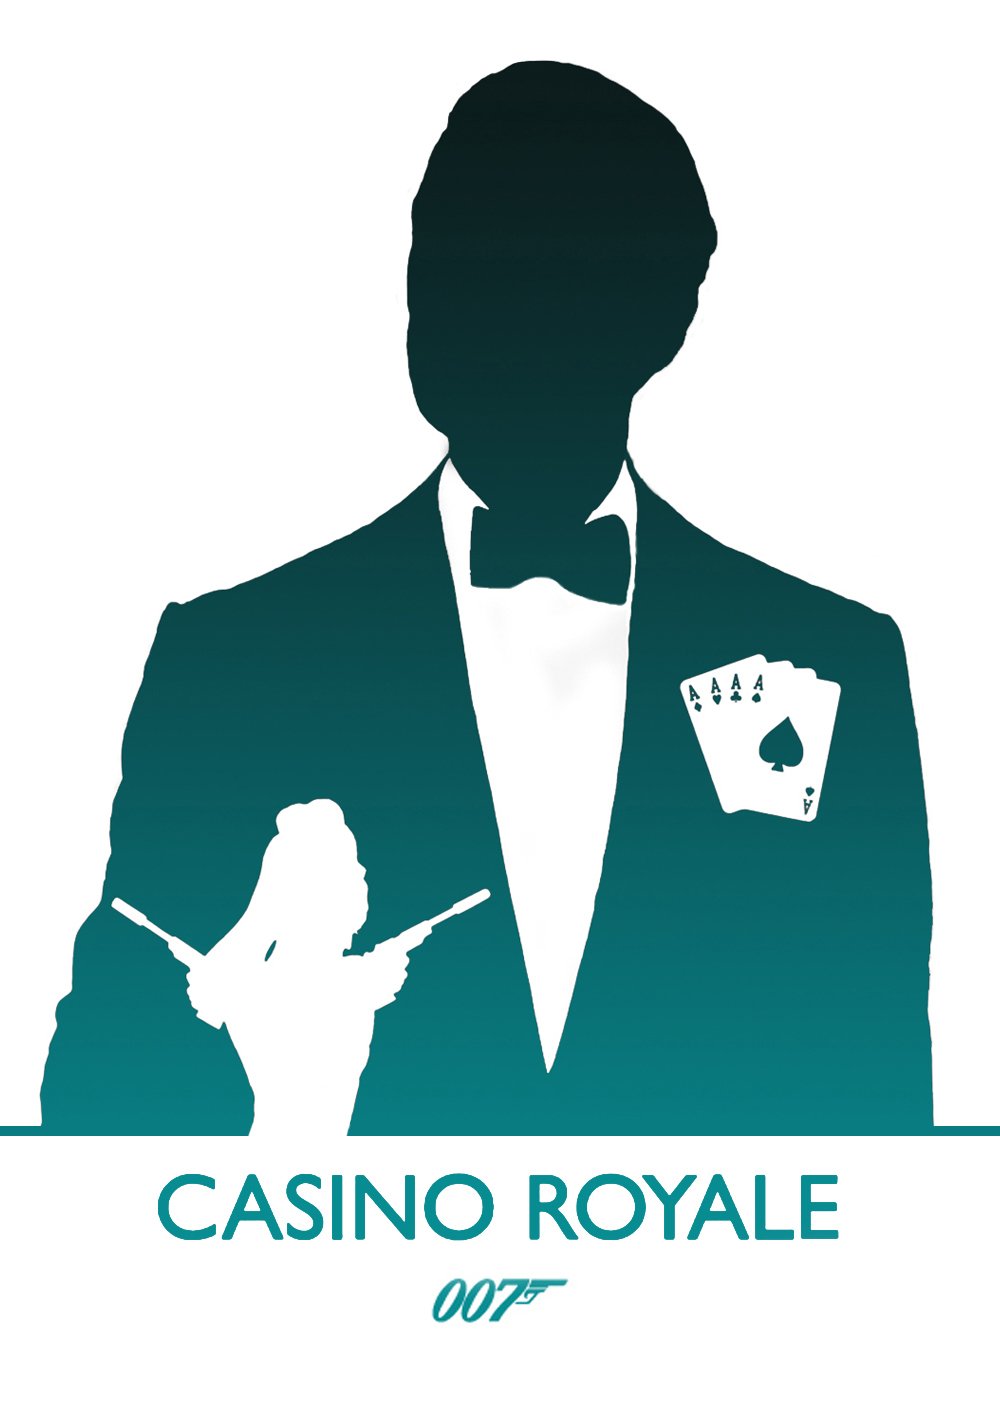 007 casino royale silhouette